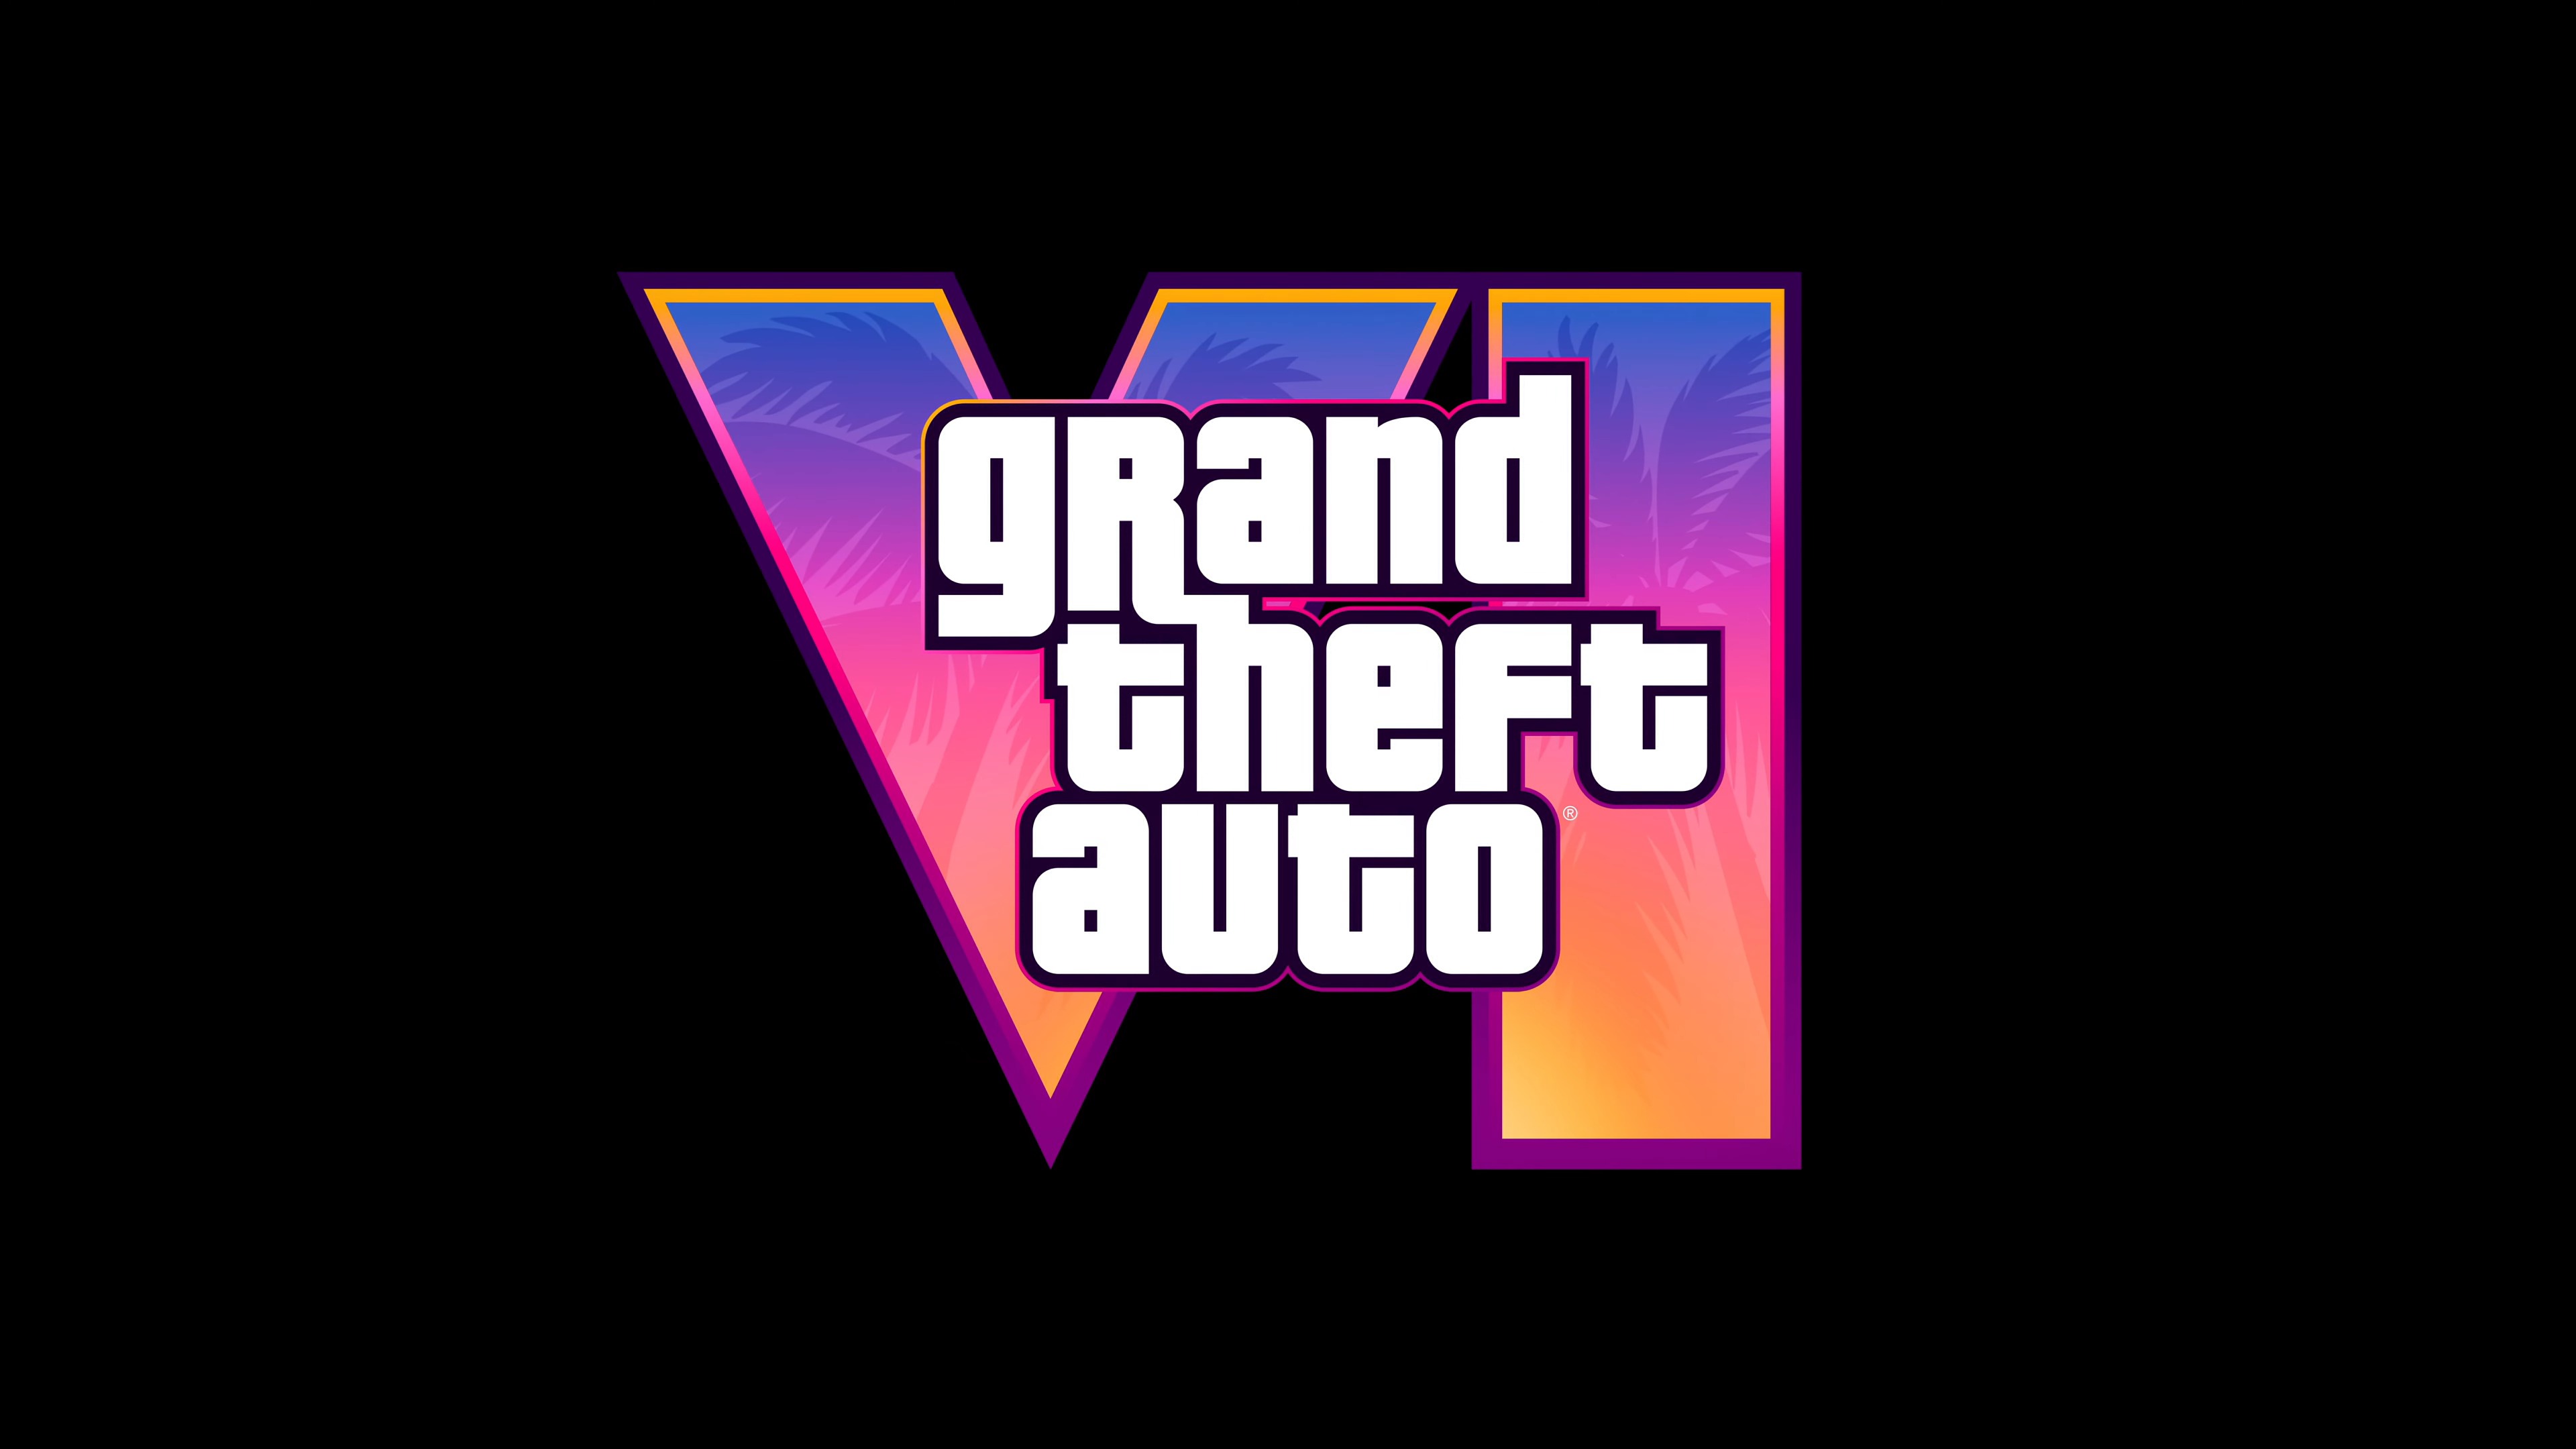 The Grand Theft Auto 6 logo